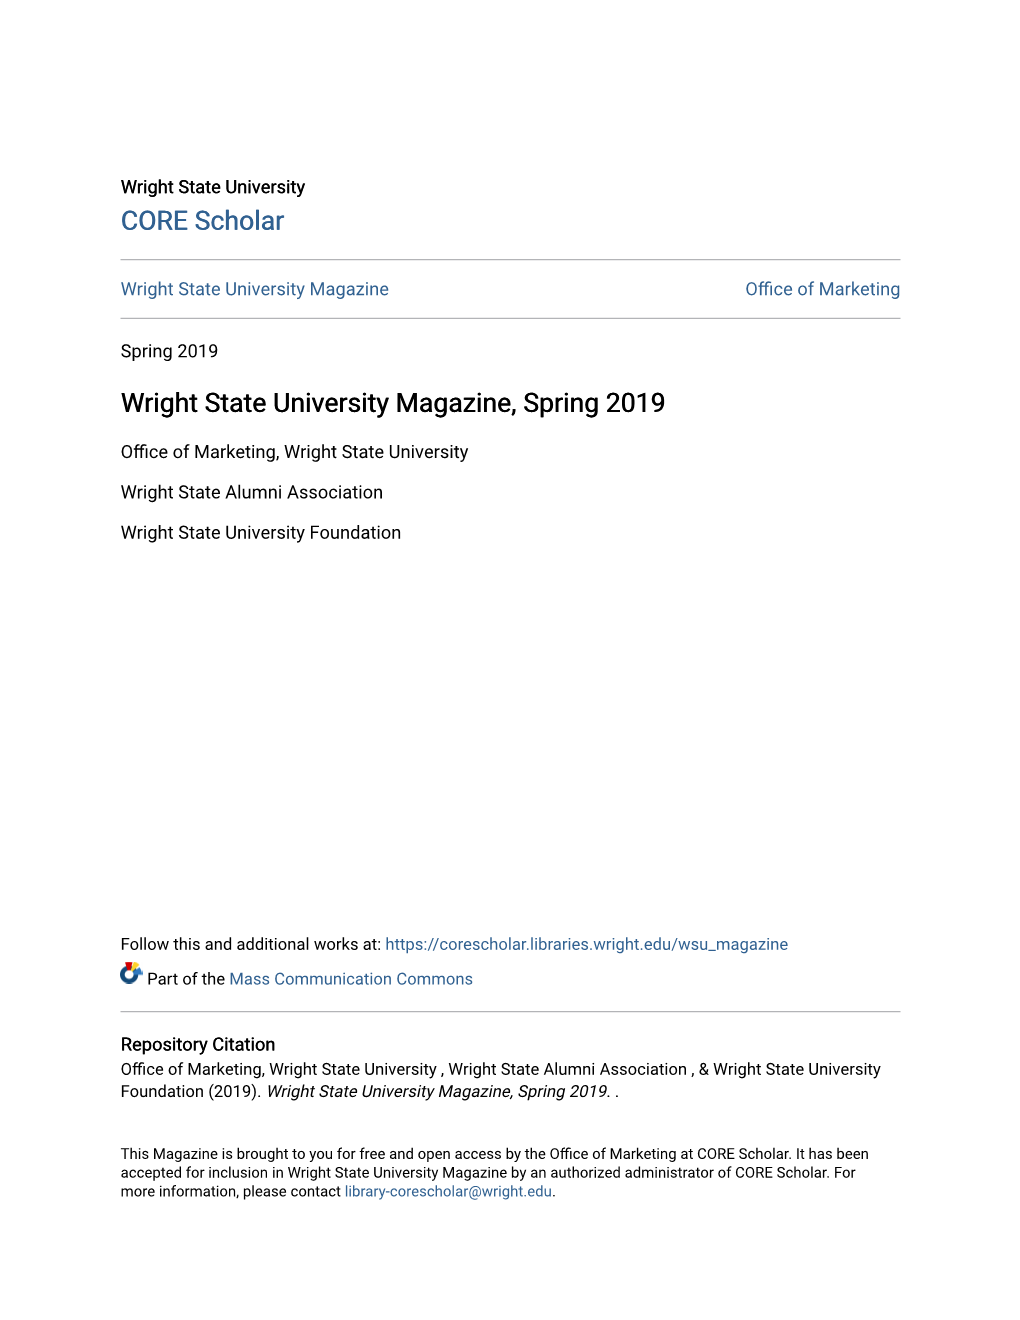 Wright State University Magazine, Spring 2019